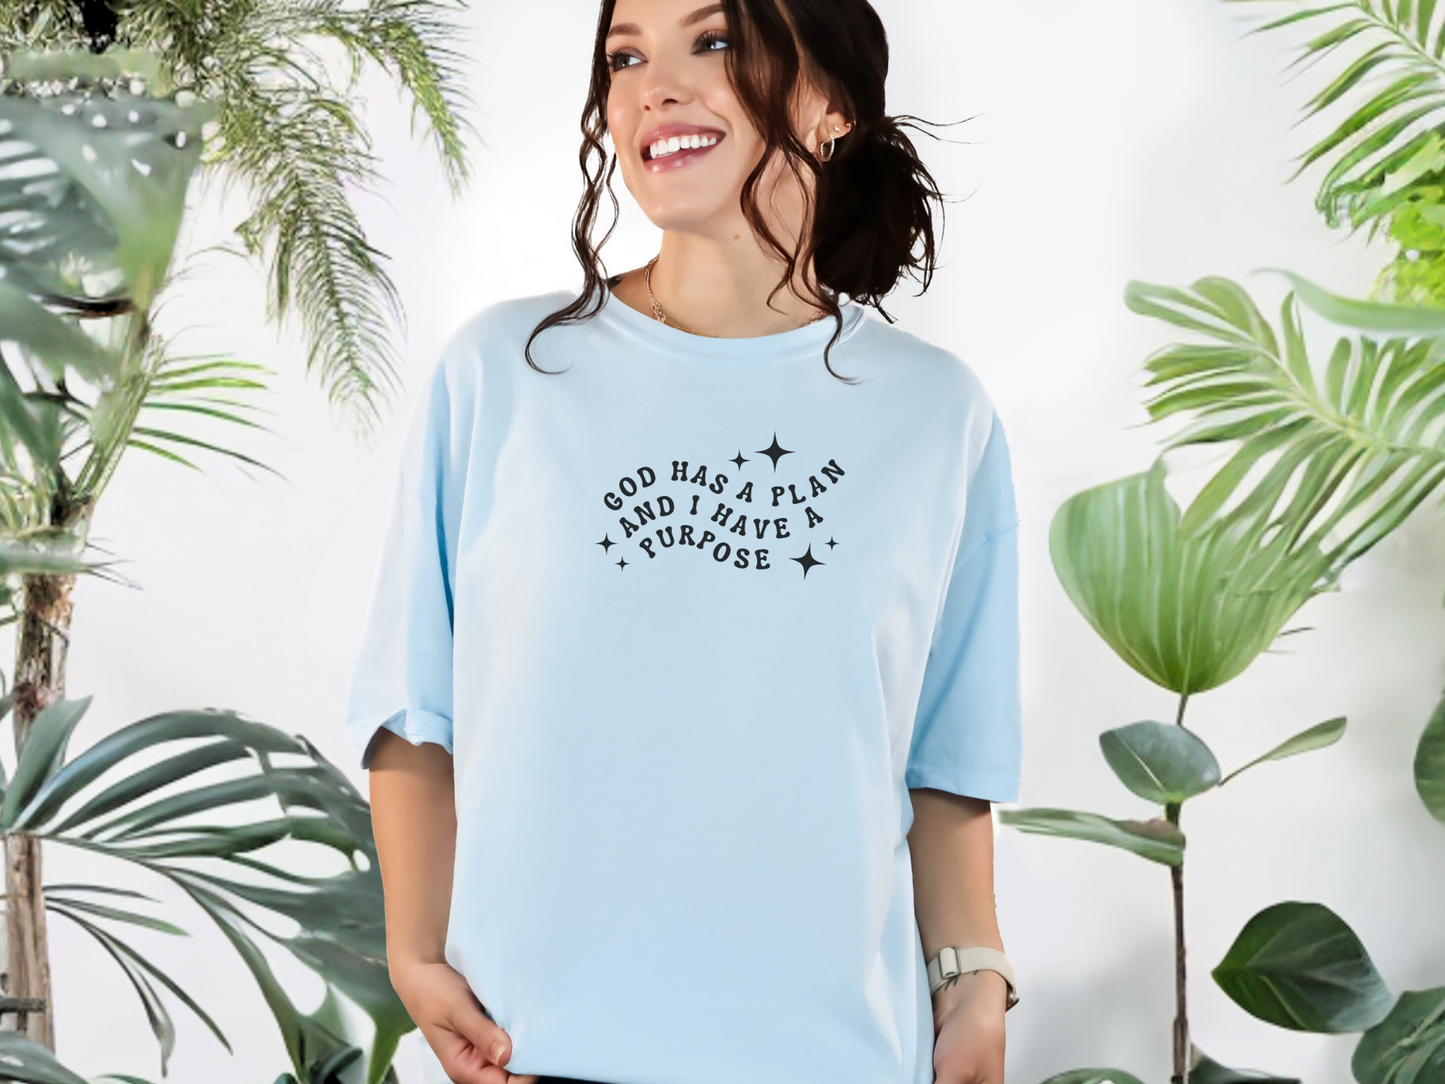 Purposefully Designed | Created with Purpose T- Shirt